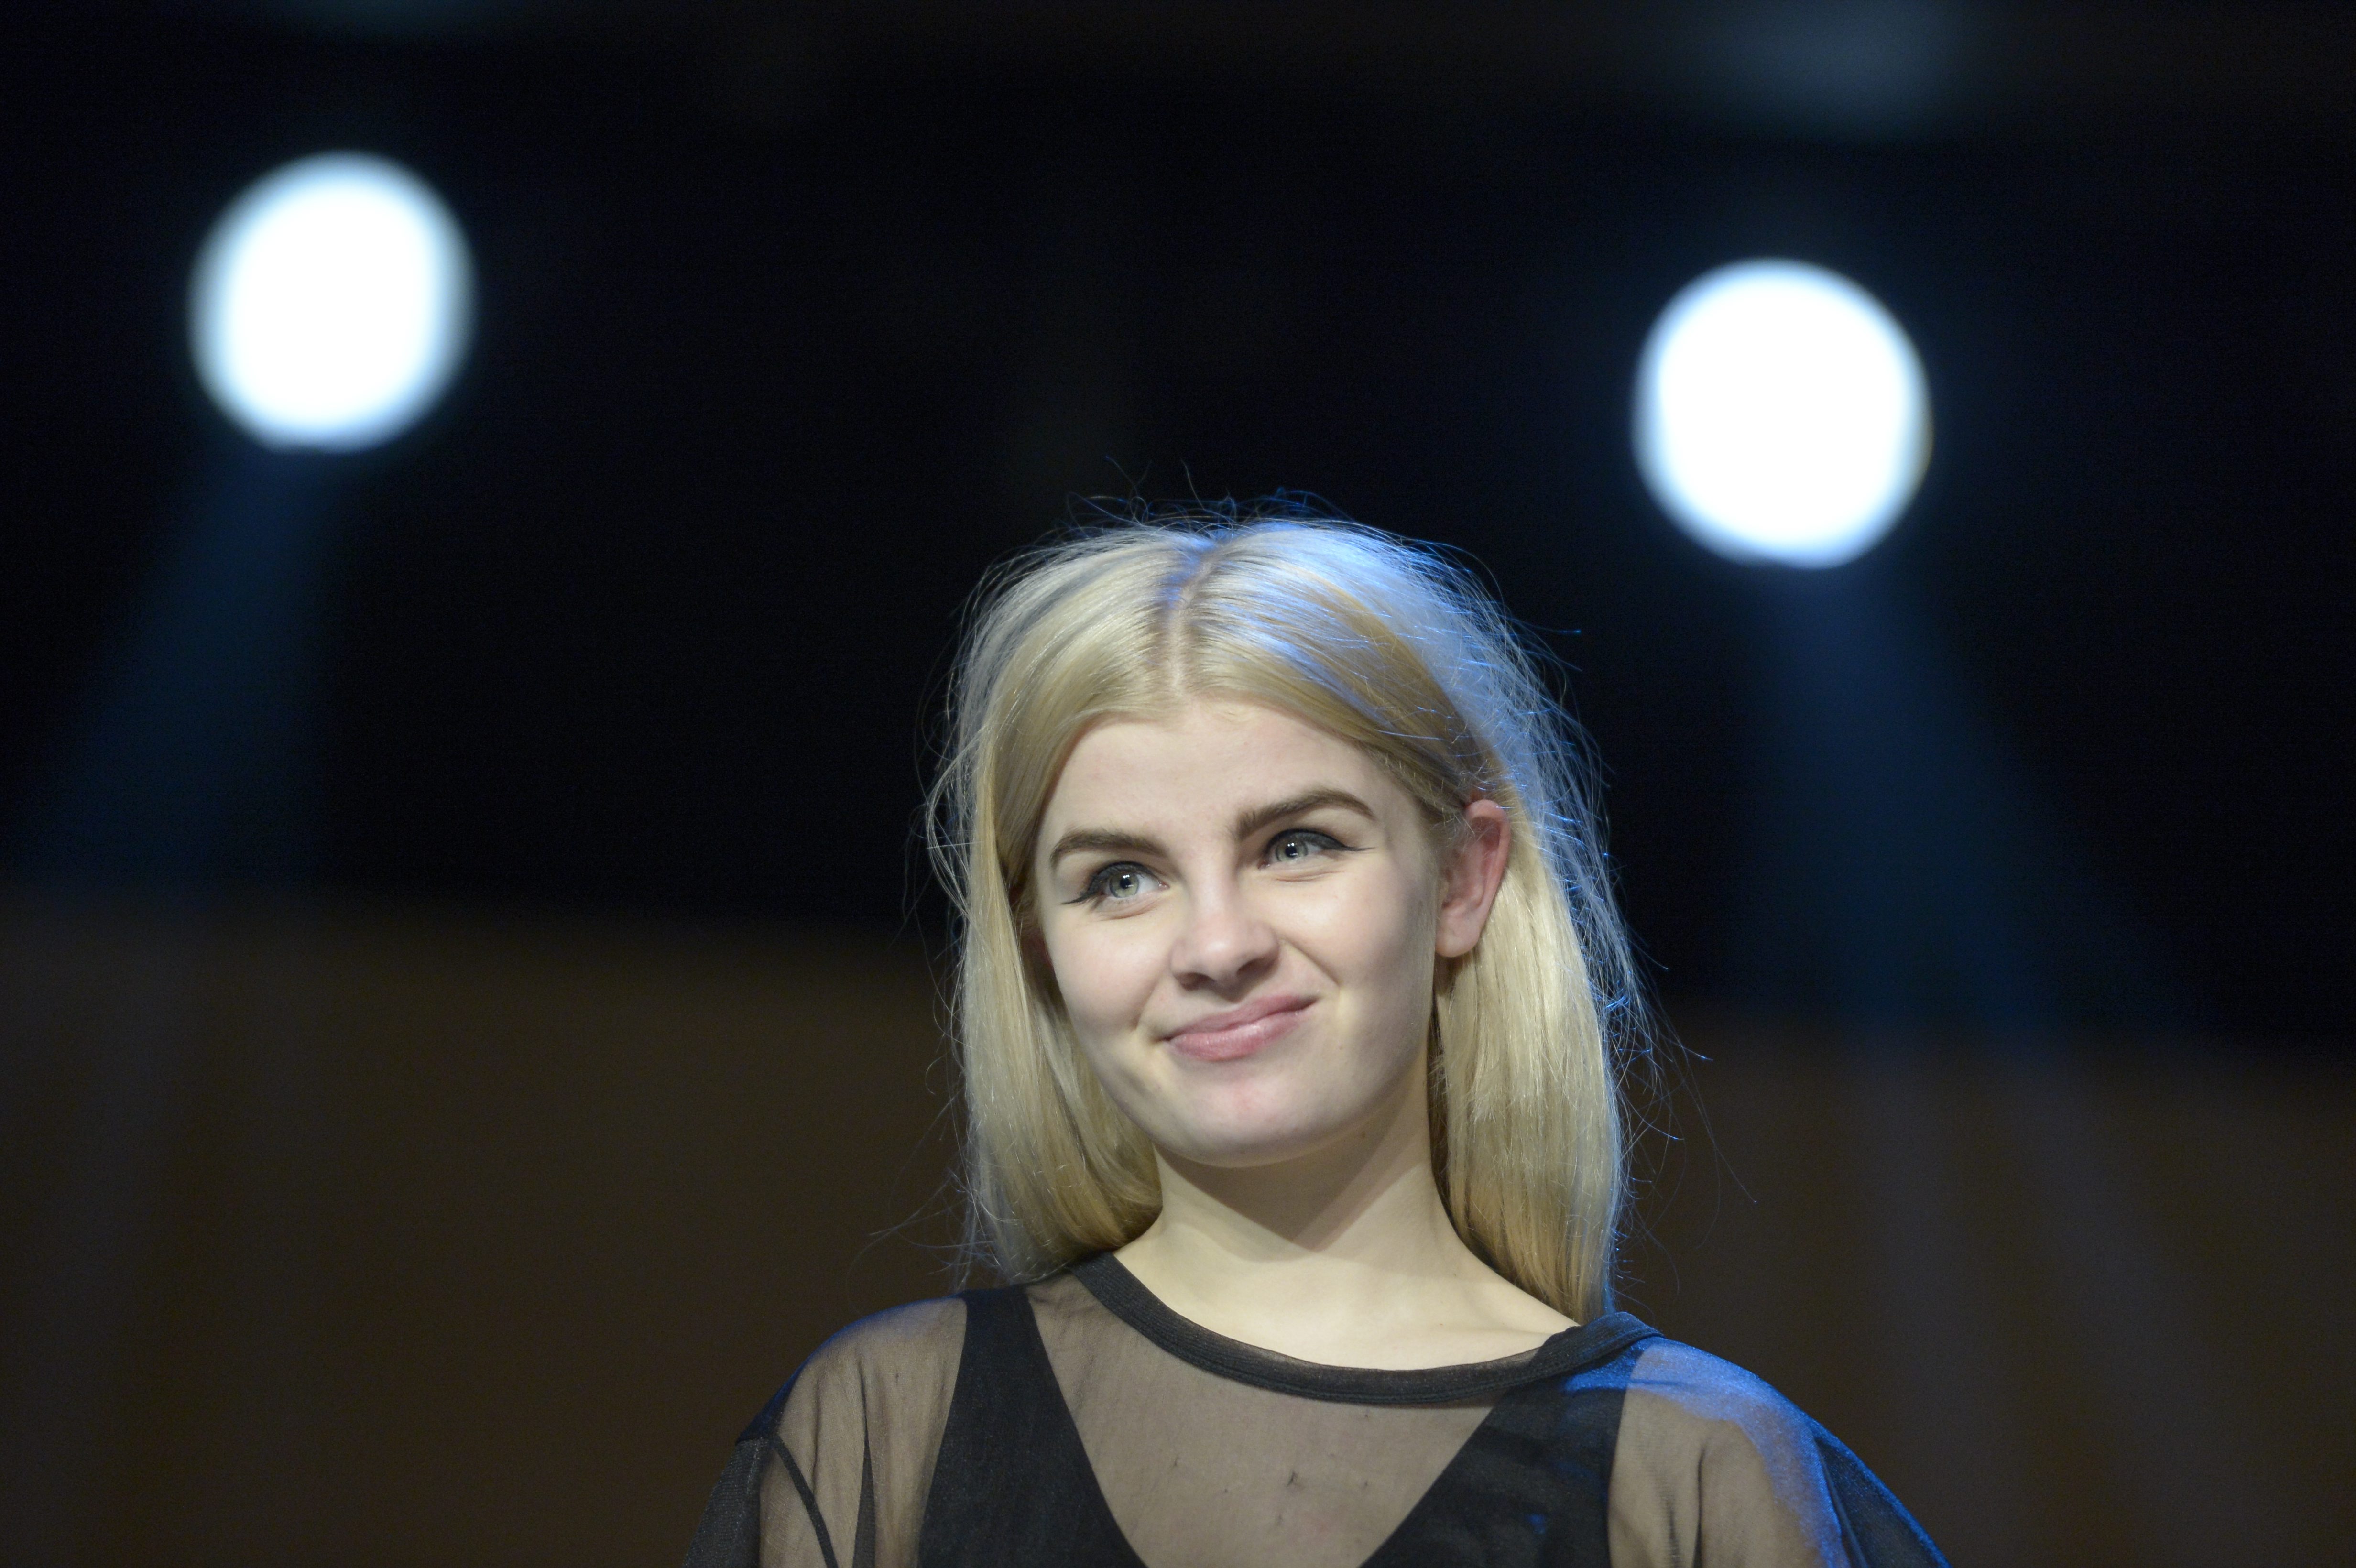 Amanda Fondell vann Idol 2011 men gick inte vidare i Melodifestivalen i år. 